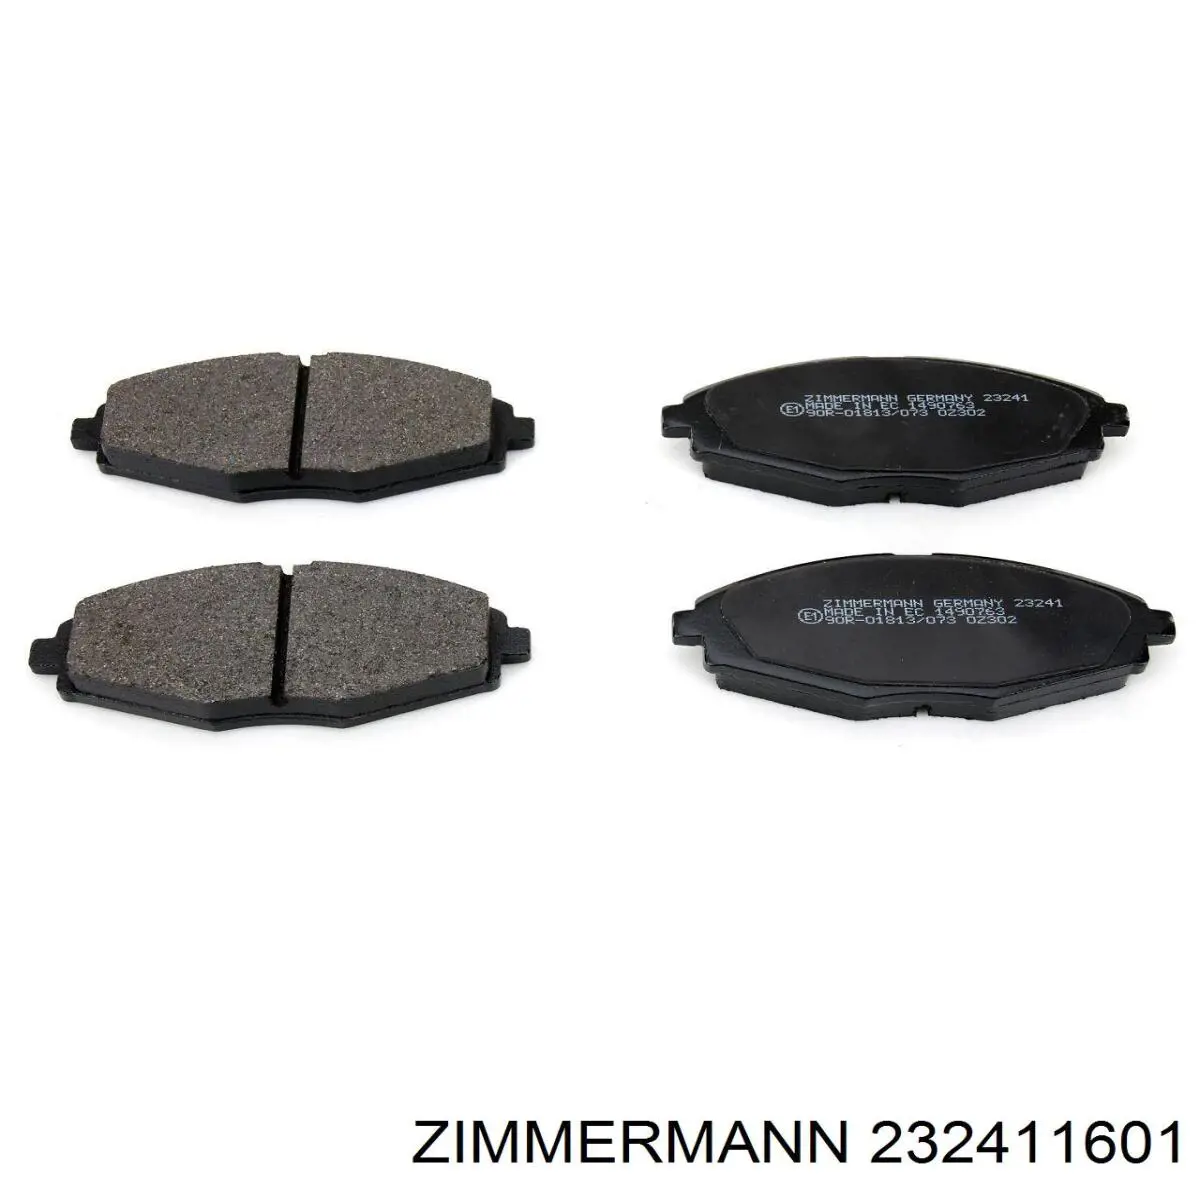 232411601 Zimmermann pastillas de freno delanteras